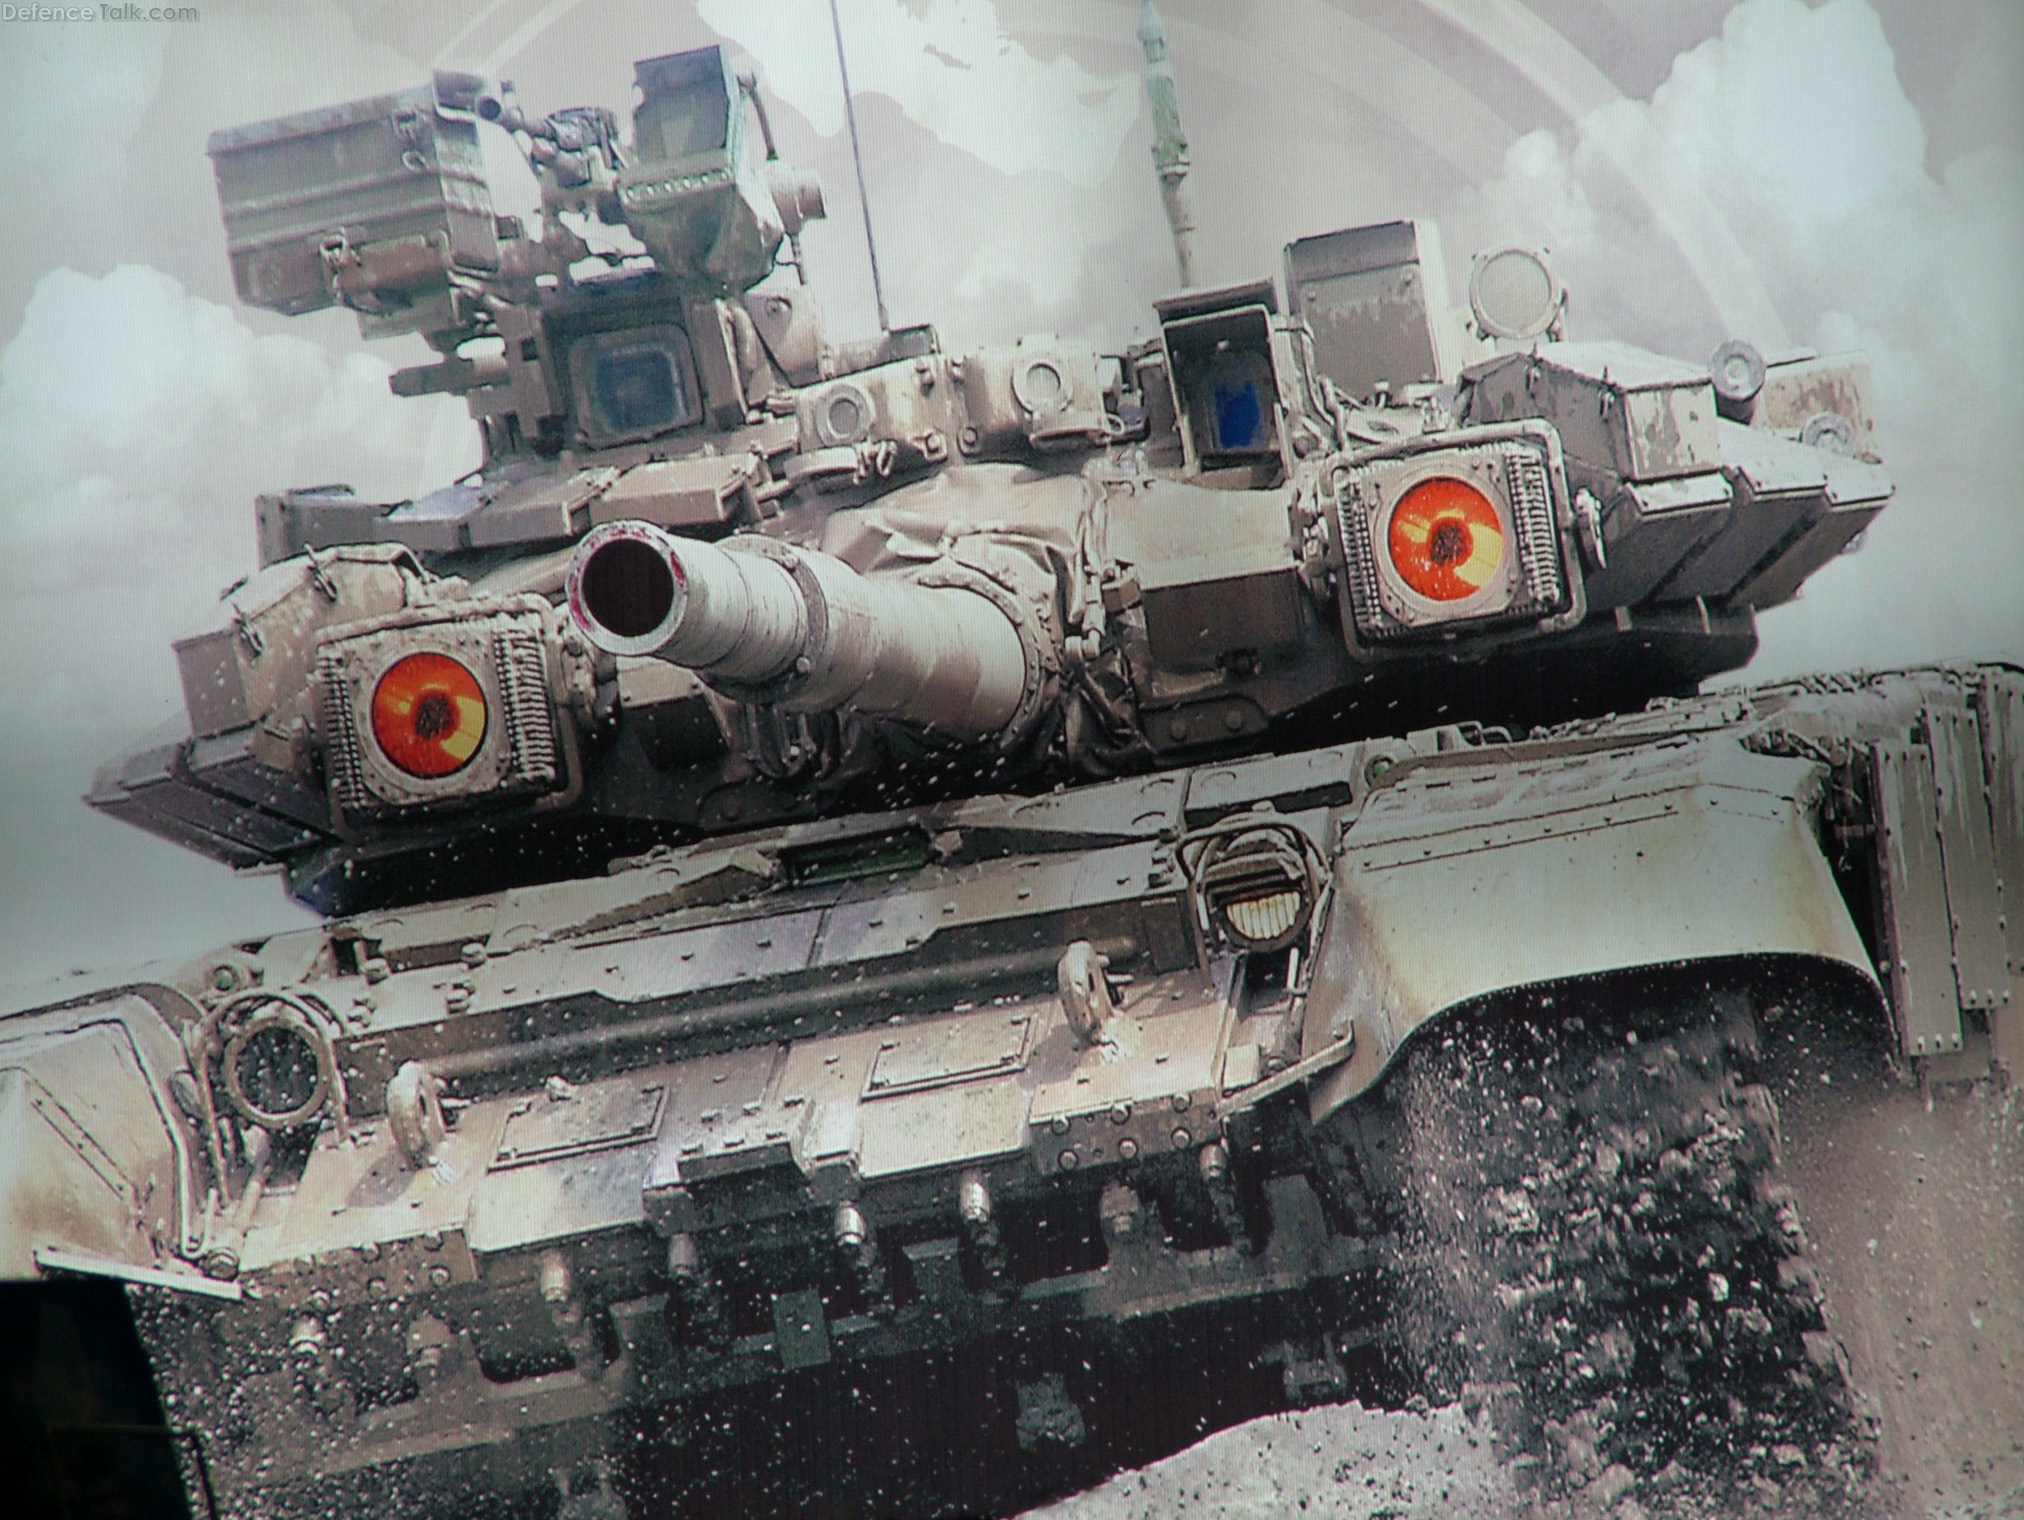 T-90A shtora active